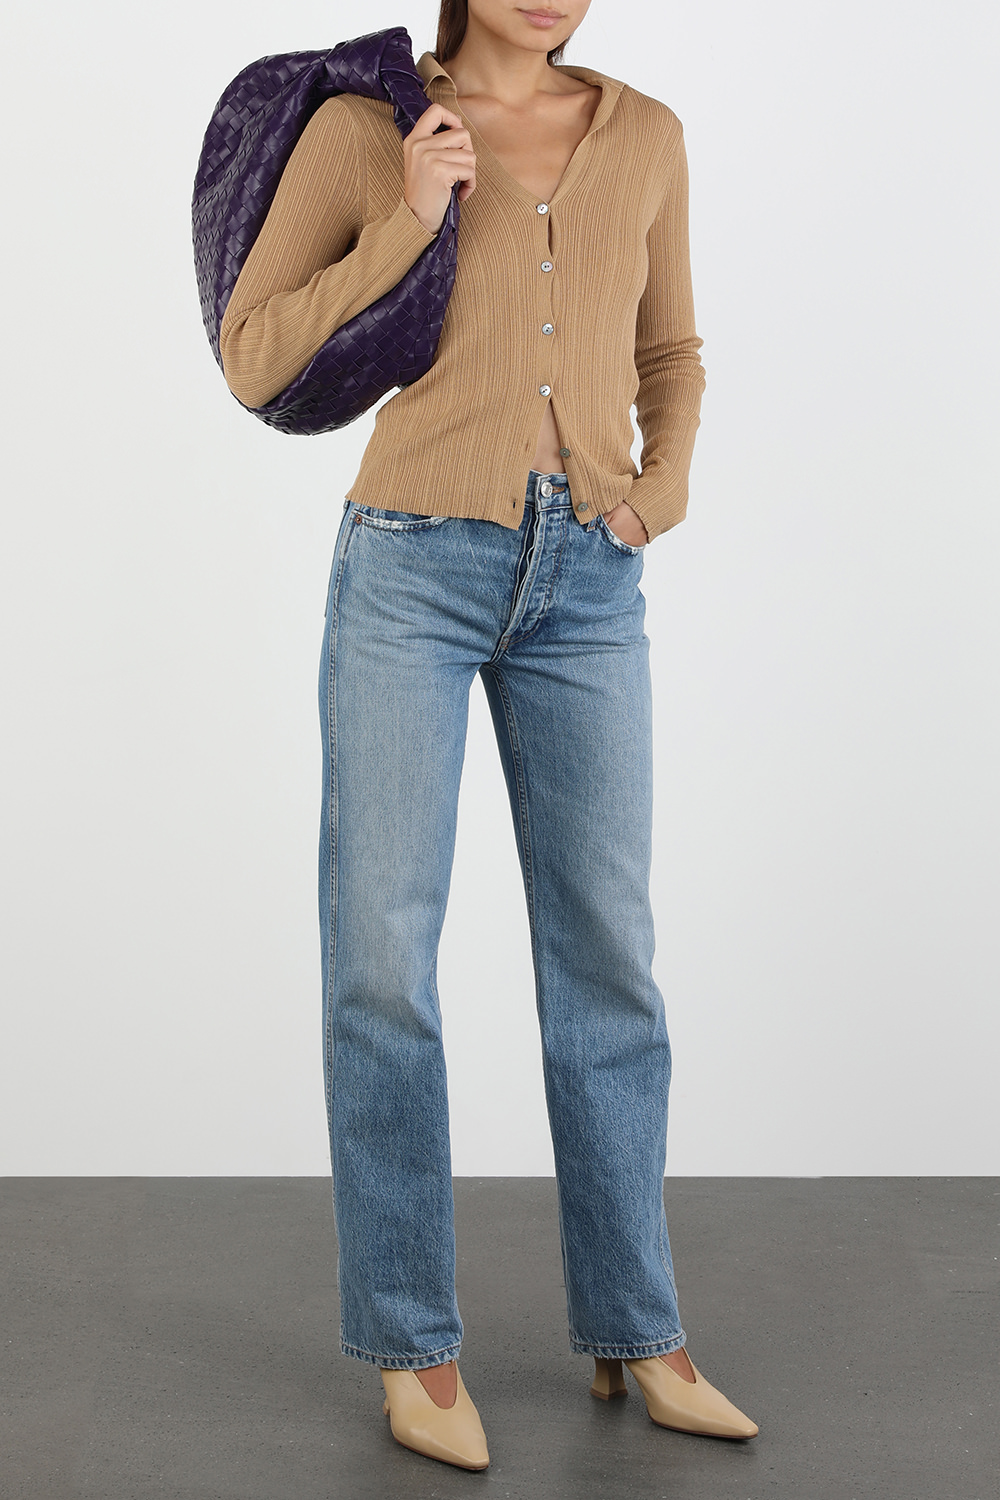 Small Jodie Leather Bag in Purple BOTTEGA VENETA